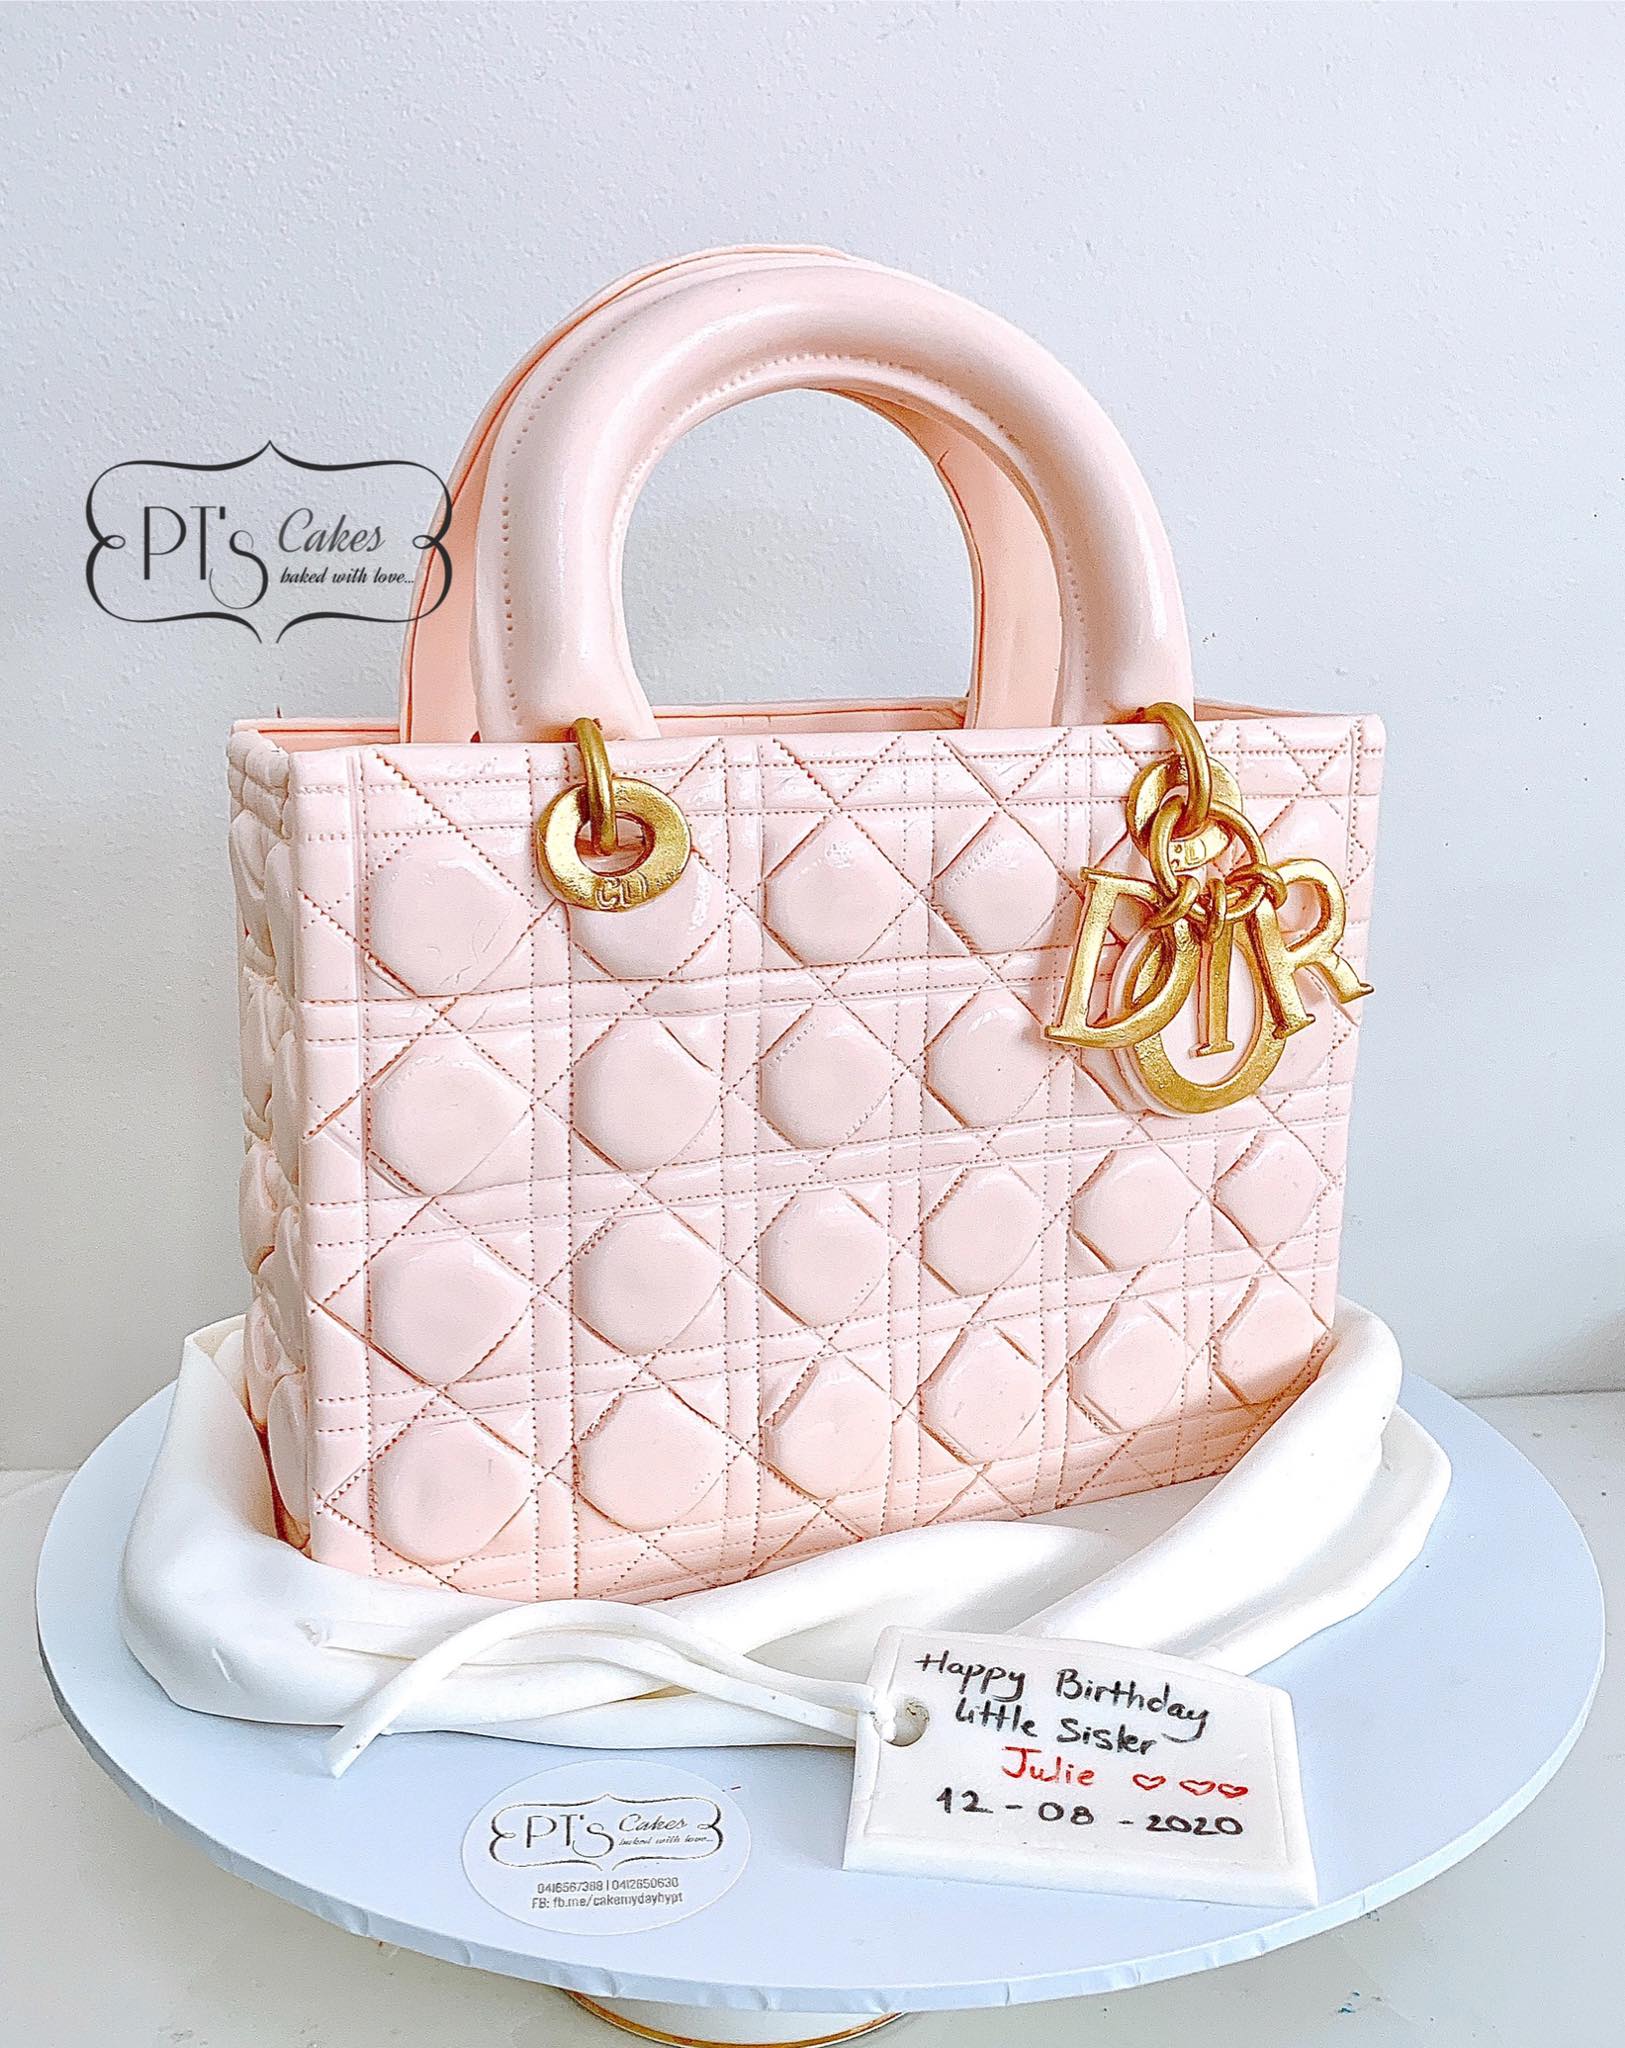 Designer handbag cake - Decorated Cake by essexflourpower - CakesDecor